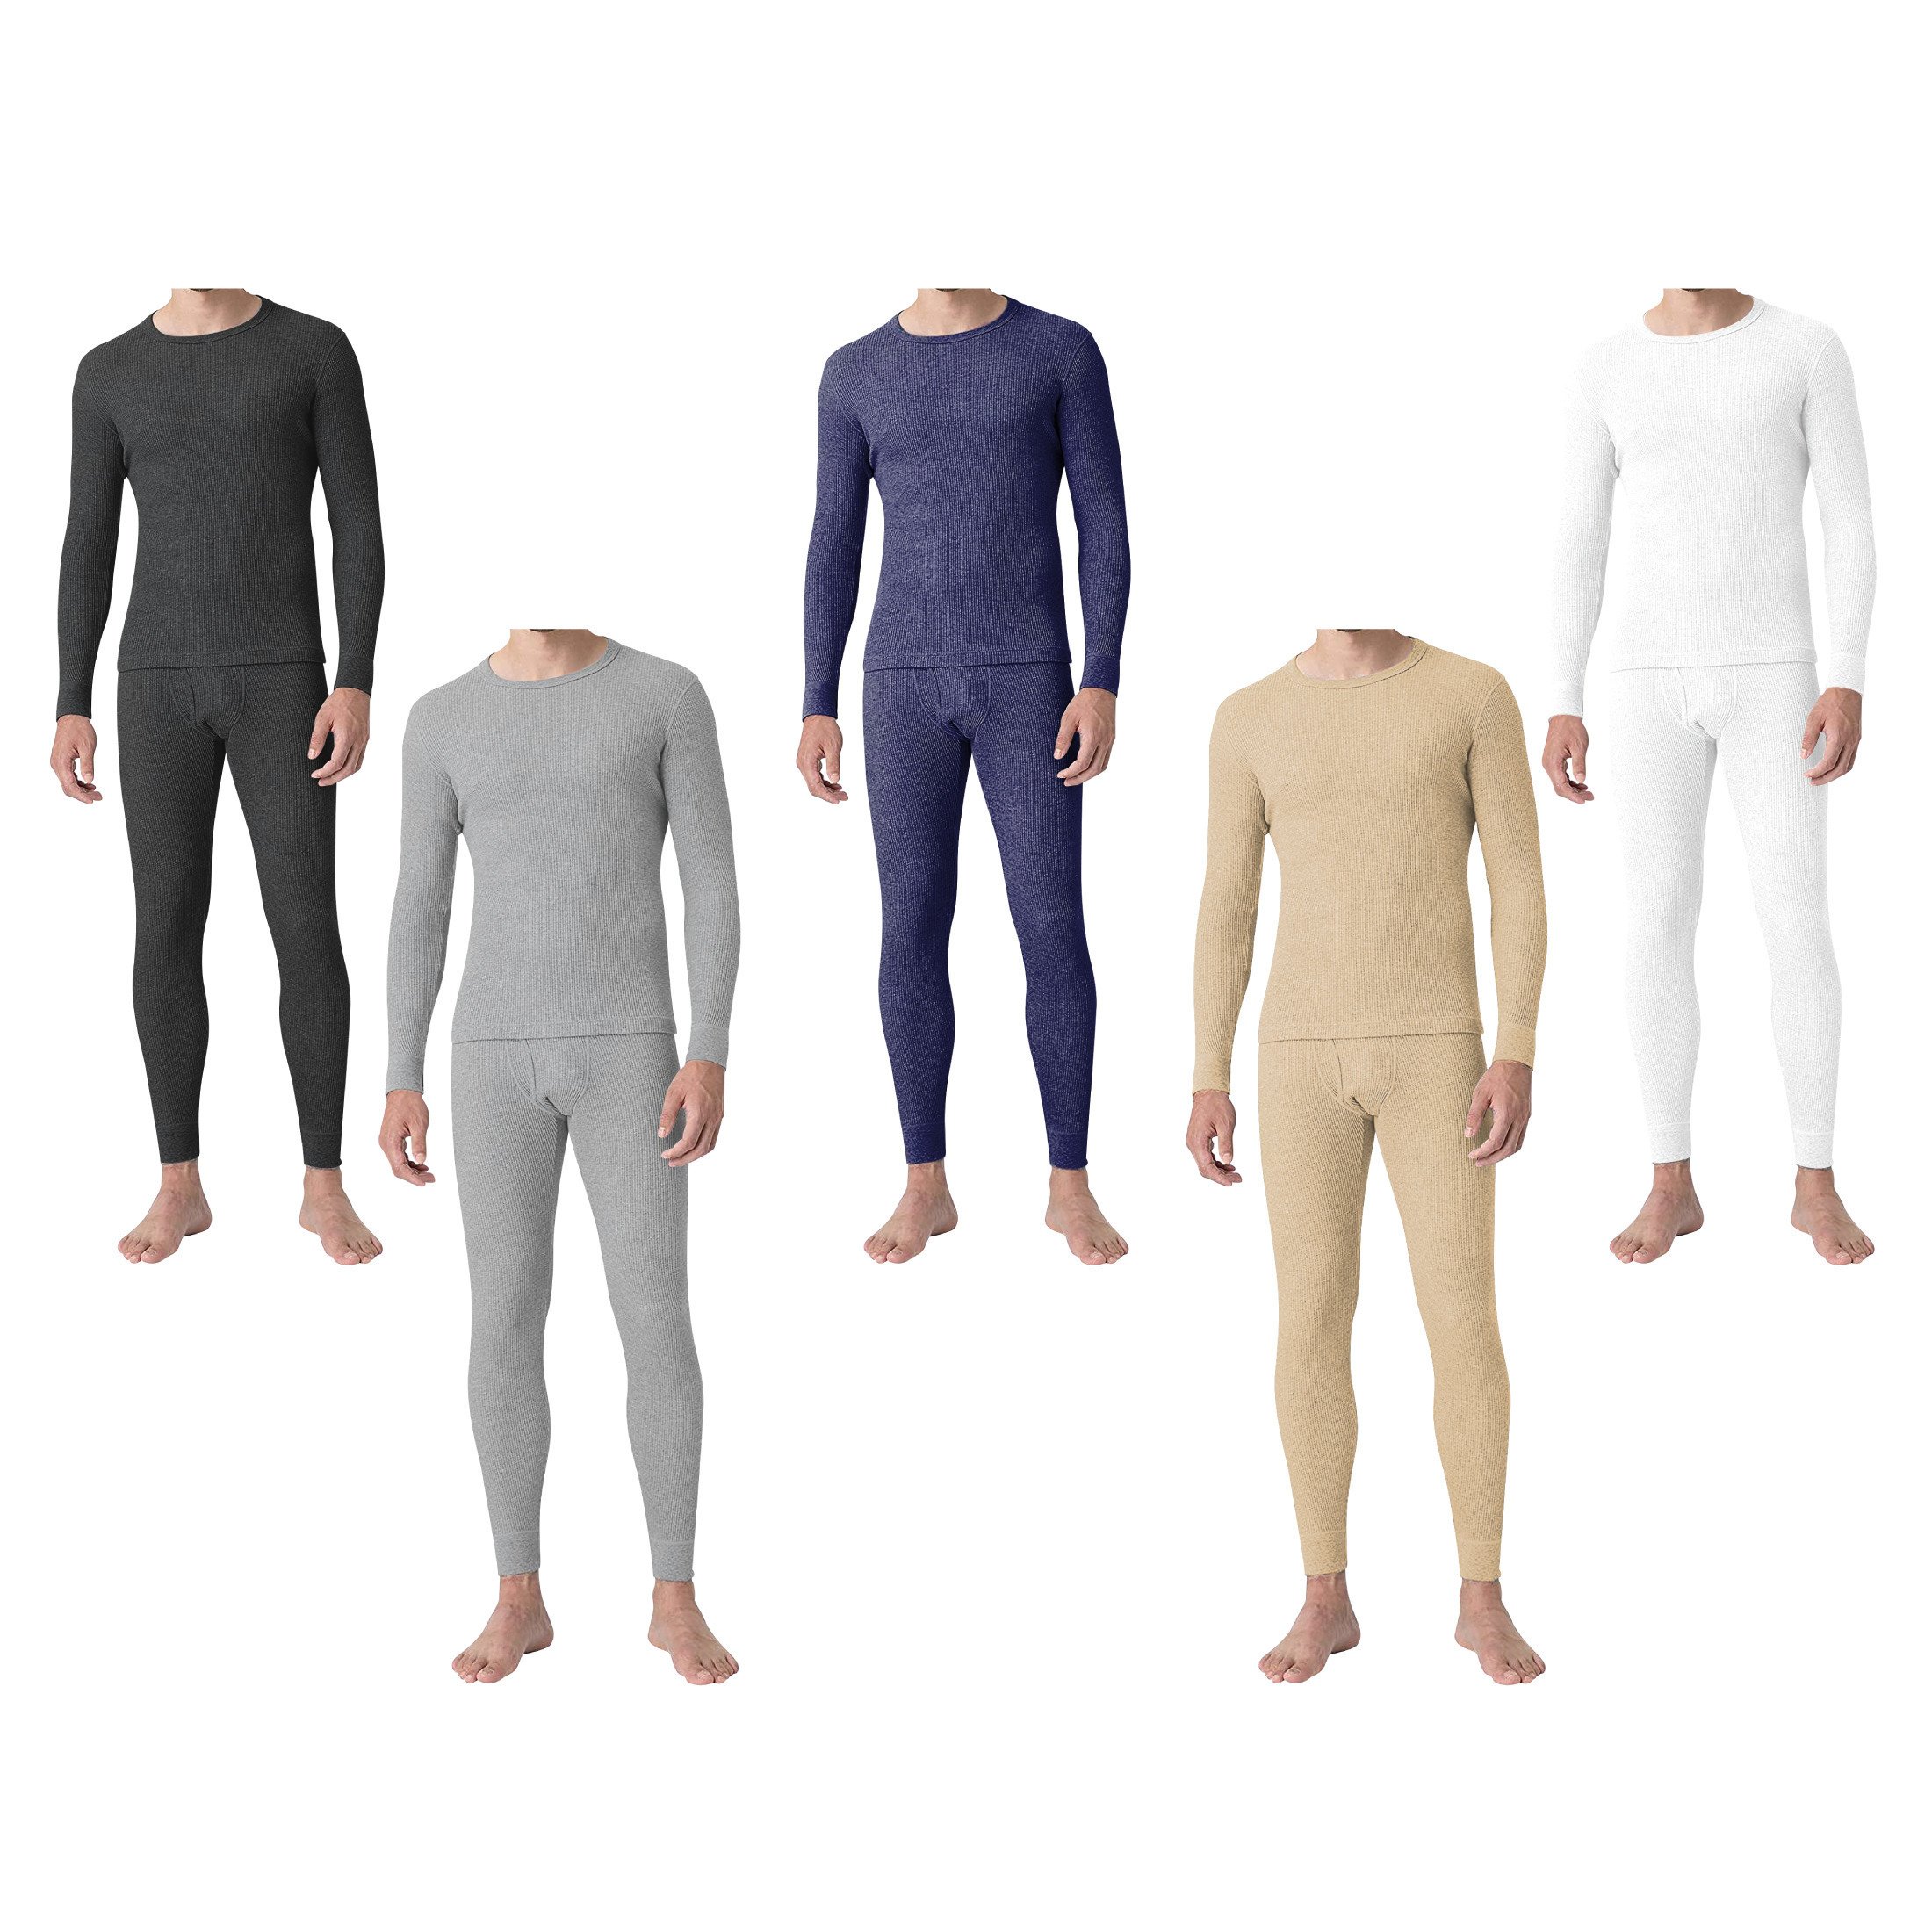 2-Sets: Men's Super Soft Cotton Waffle Knit Winter Thermal Underwear Set - Black & Navy, X-Large